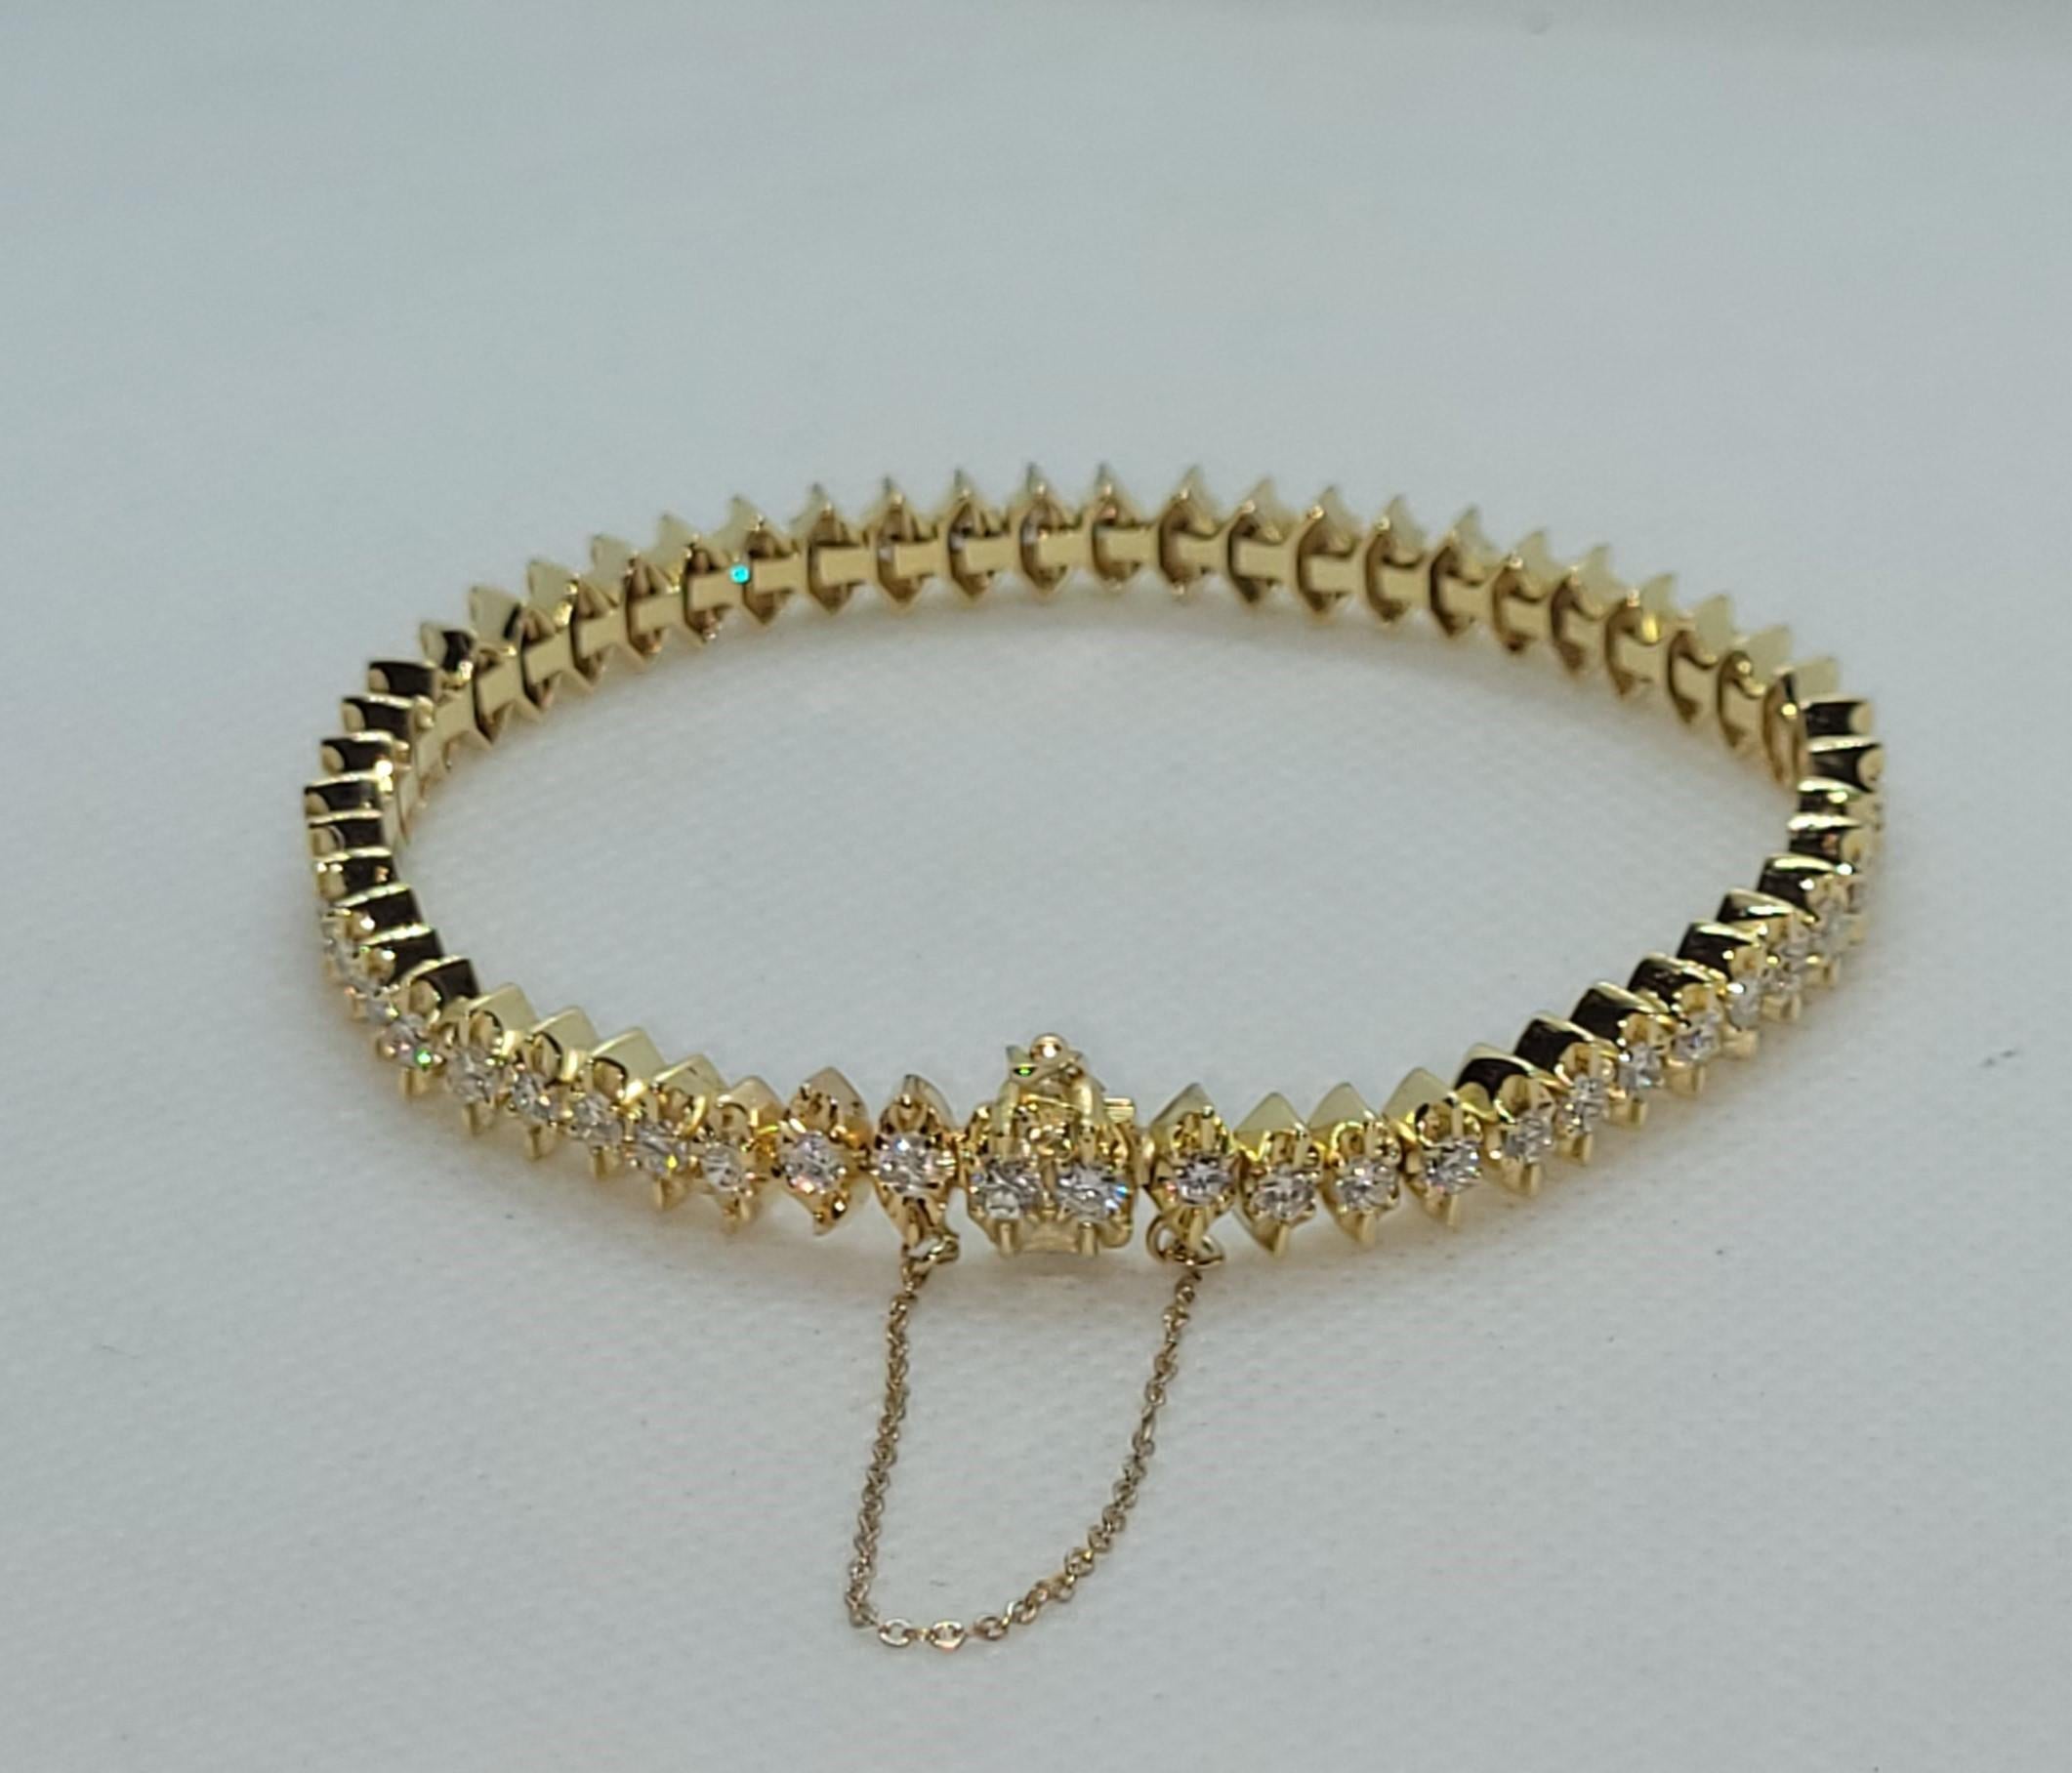 Modern 18kt Gold Round Brilliant Diamond Tennis Bracelet, 7 Inch, 4.05cttw, 24 Grams For Sale